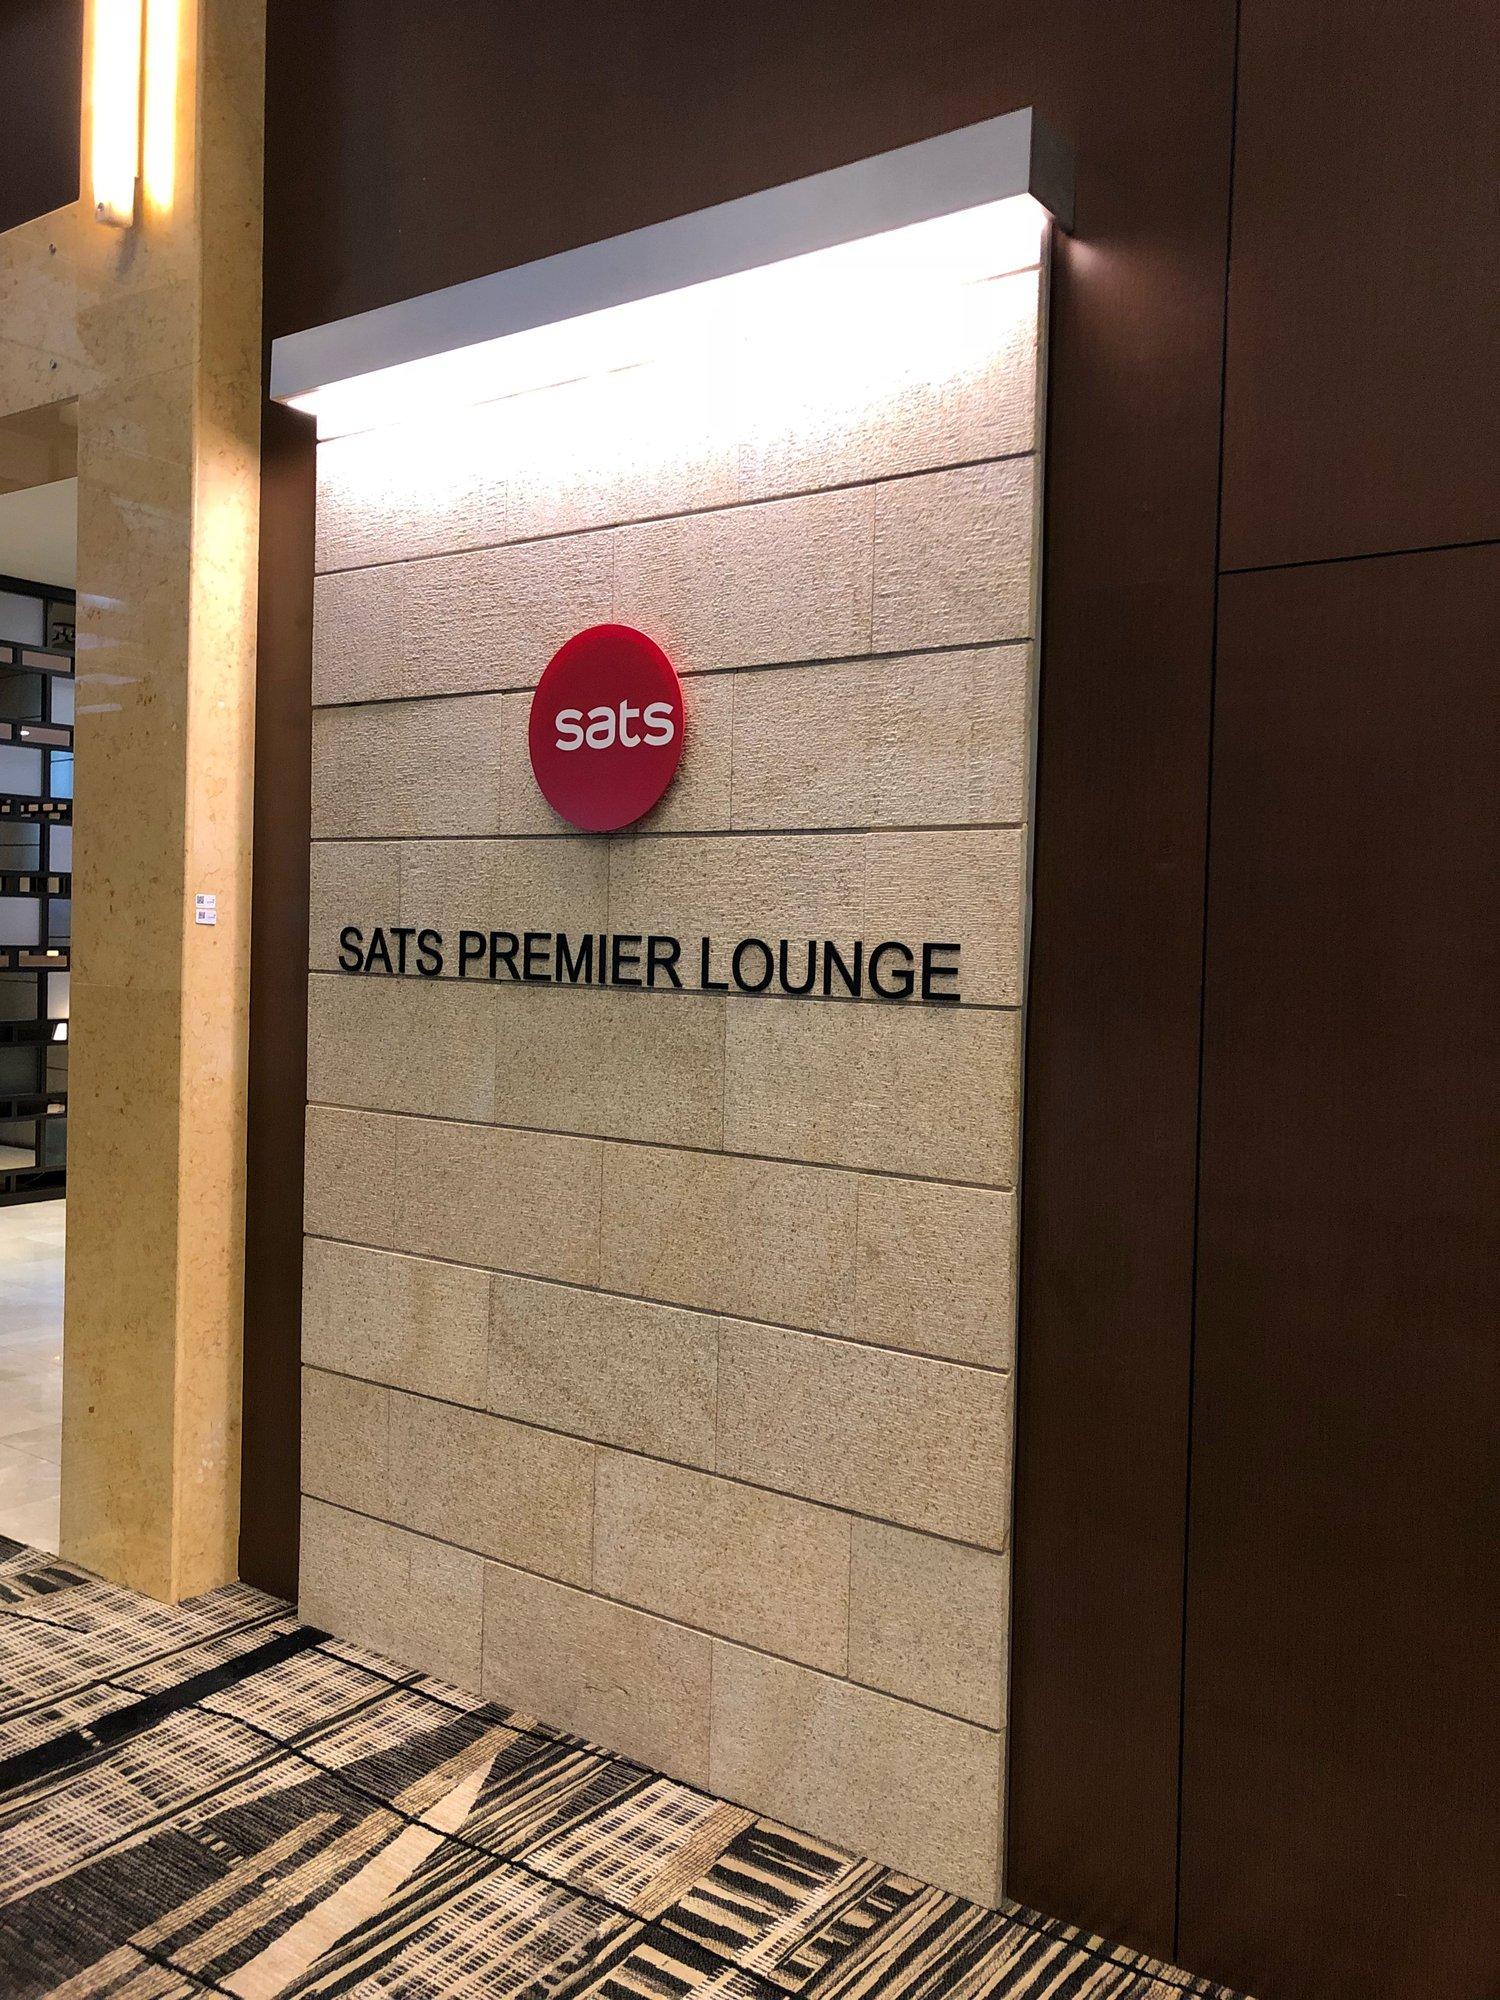 SATS Premier Lounge image 41 of 61